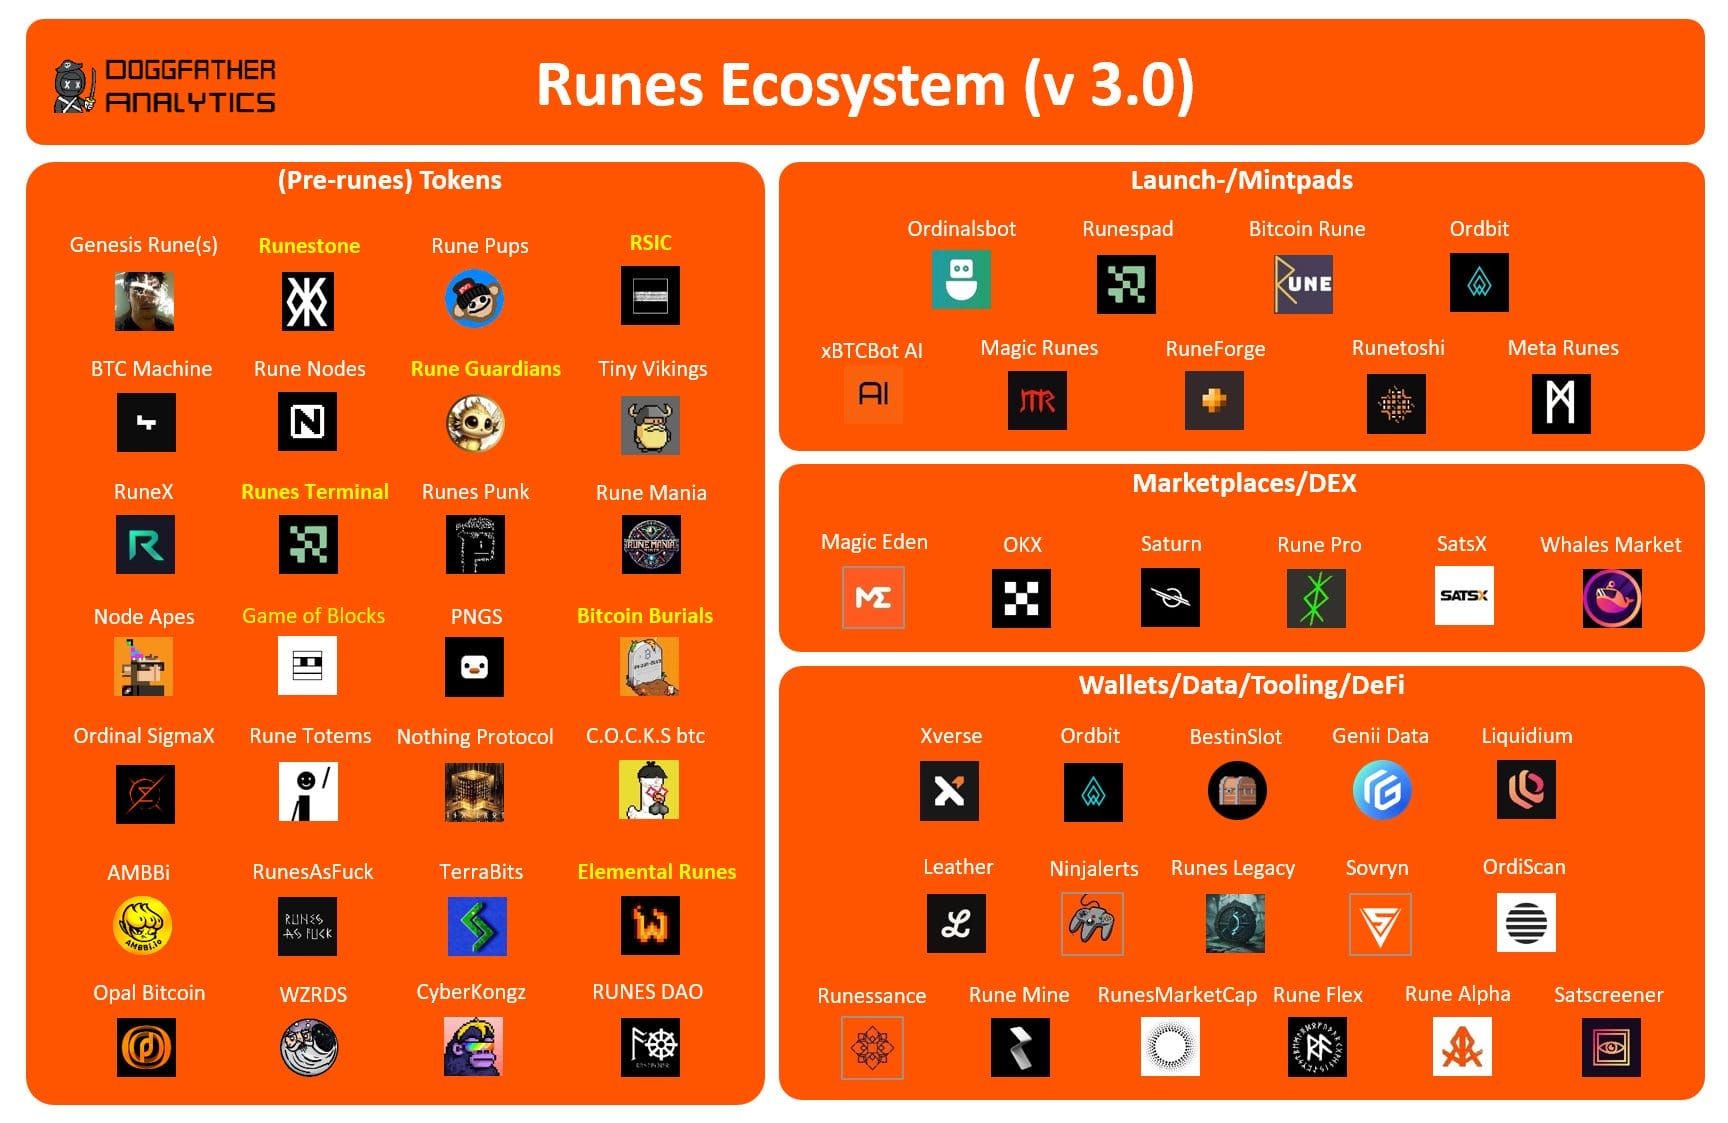 Rune ecosystem overview